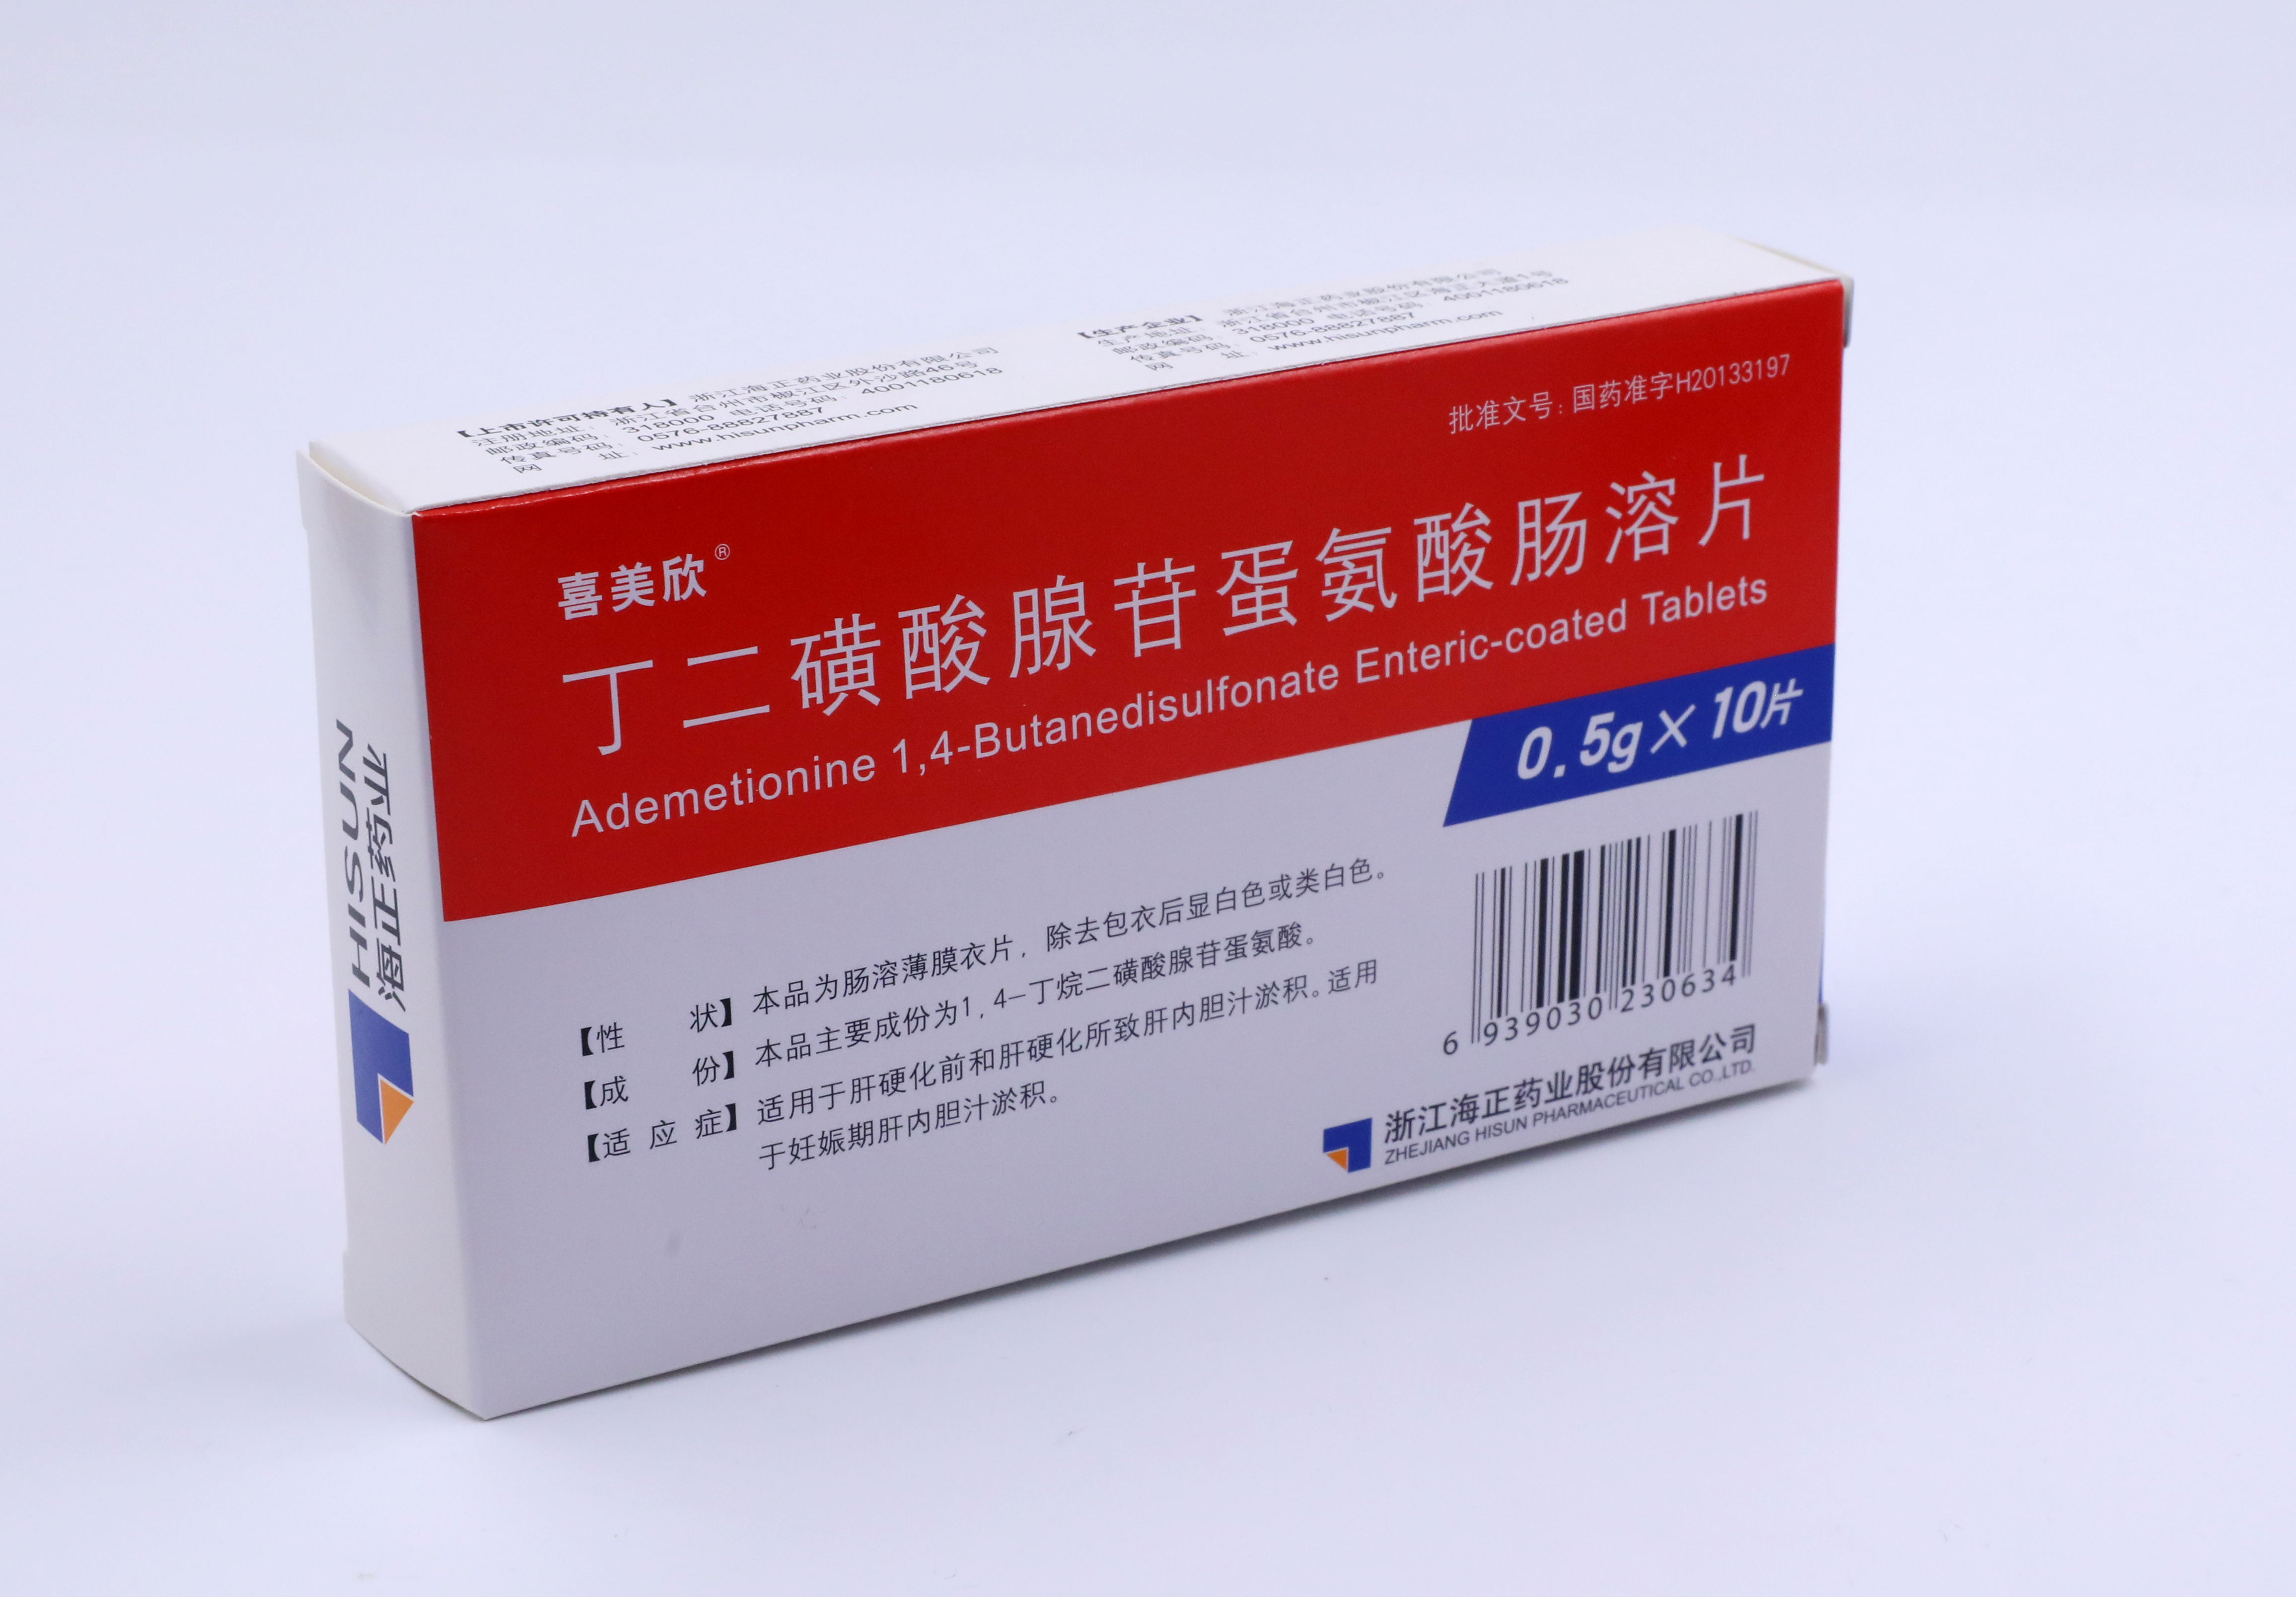 Liver care Ademetionine 1, 4-Butanedisulfonate Enteric-coated Tablets (0.5g)